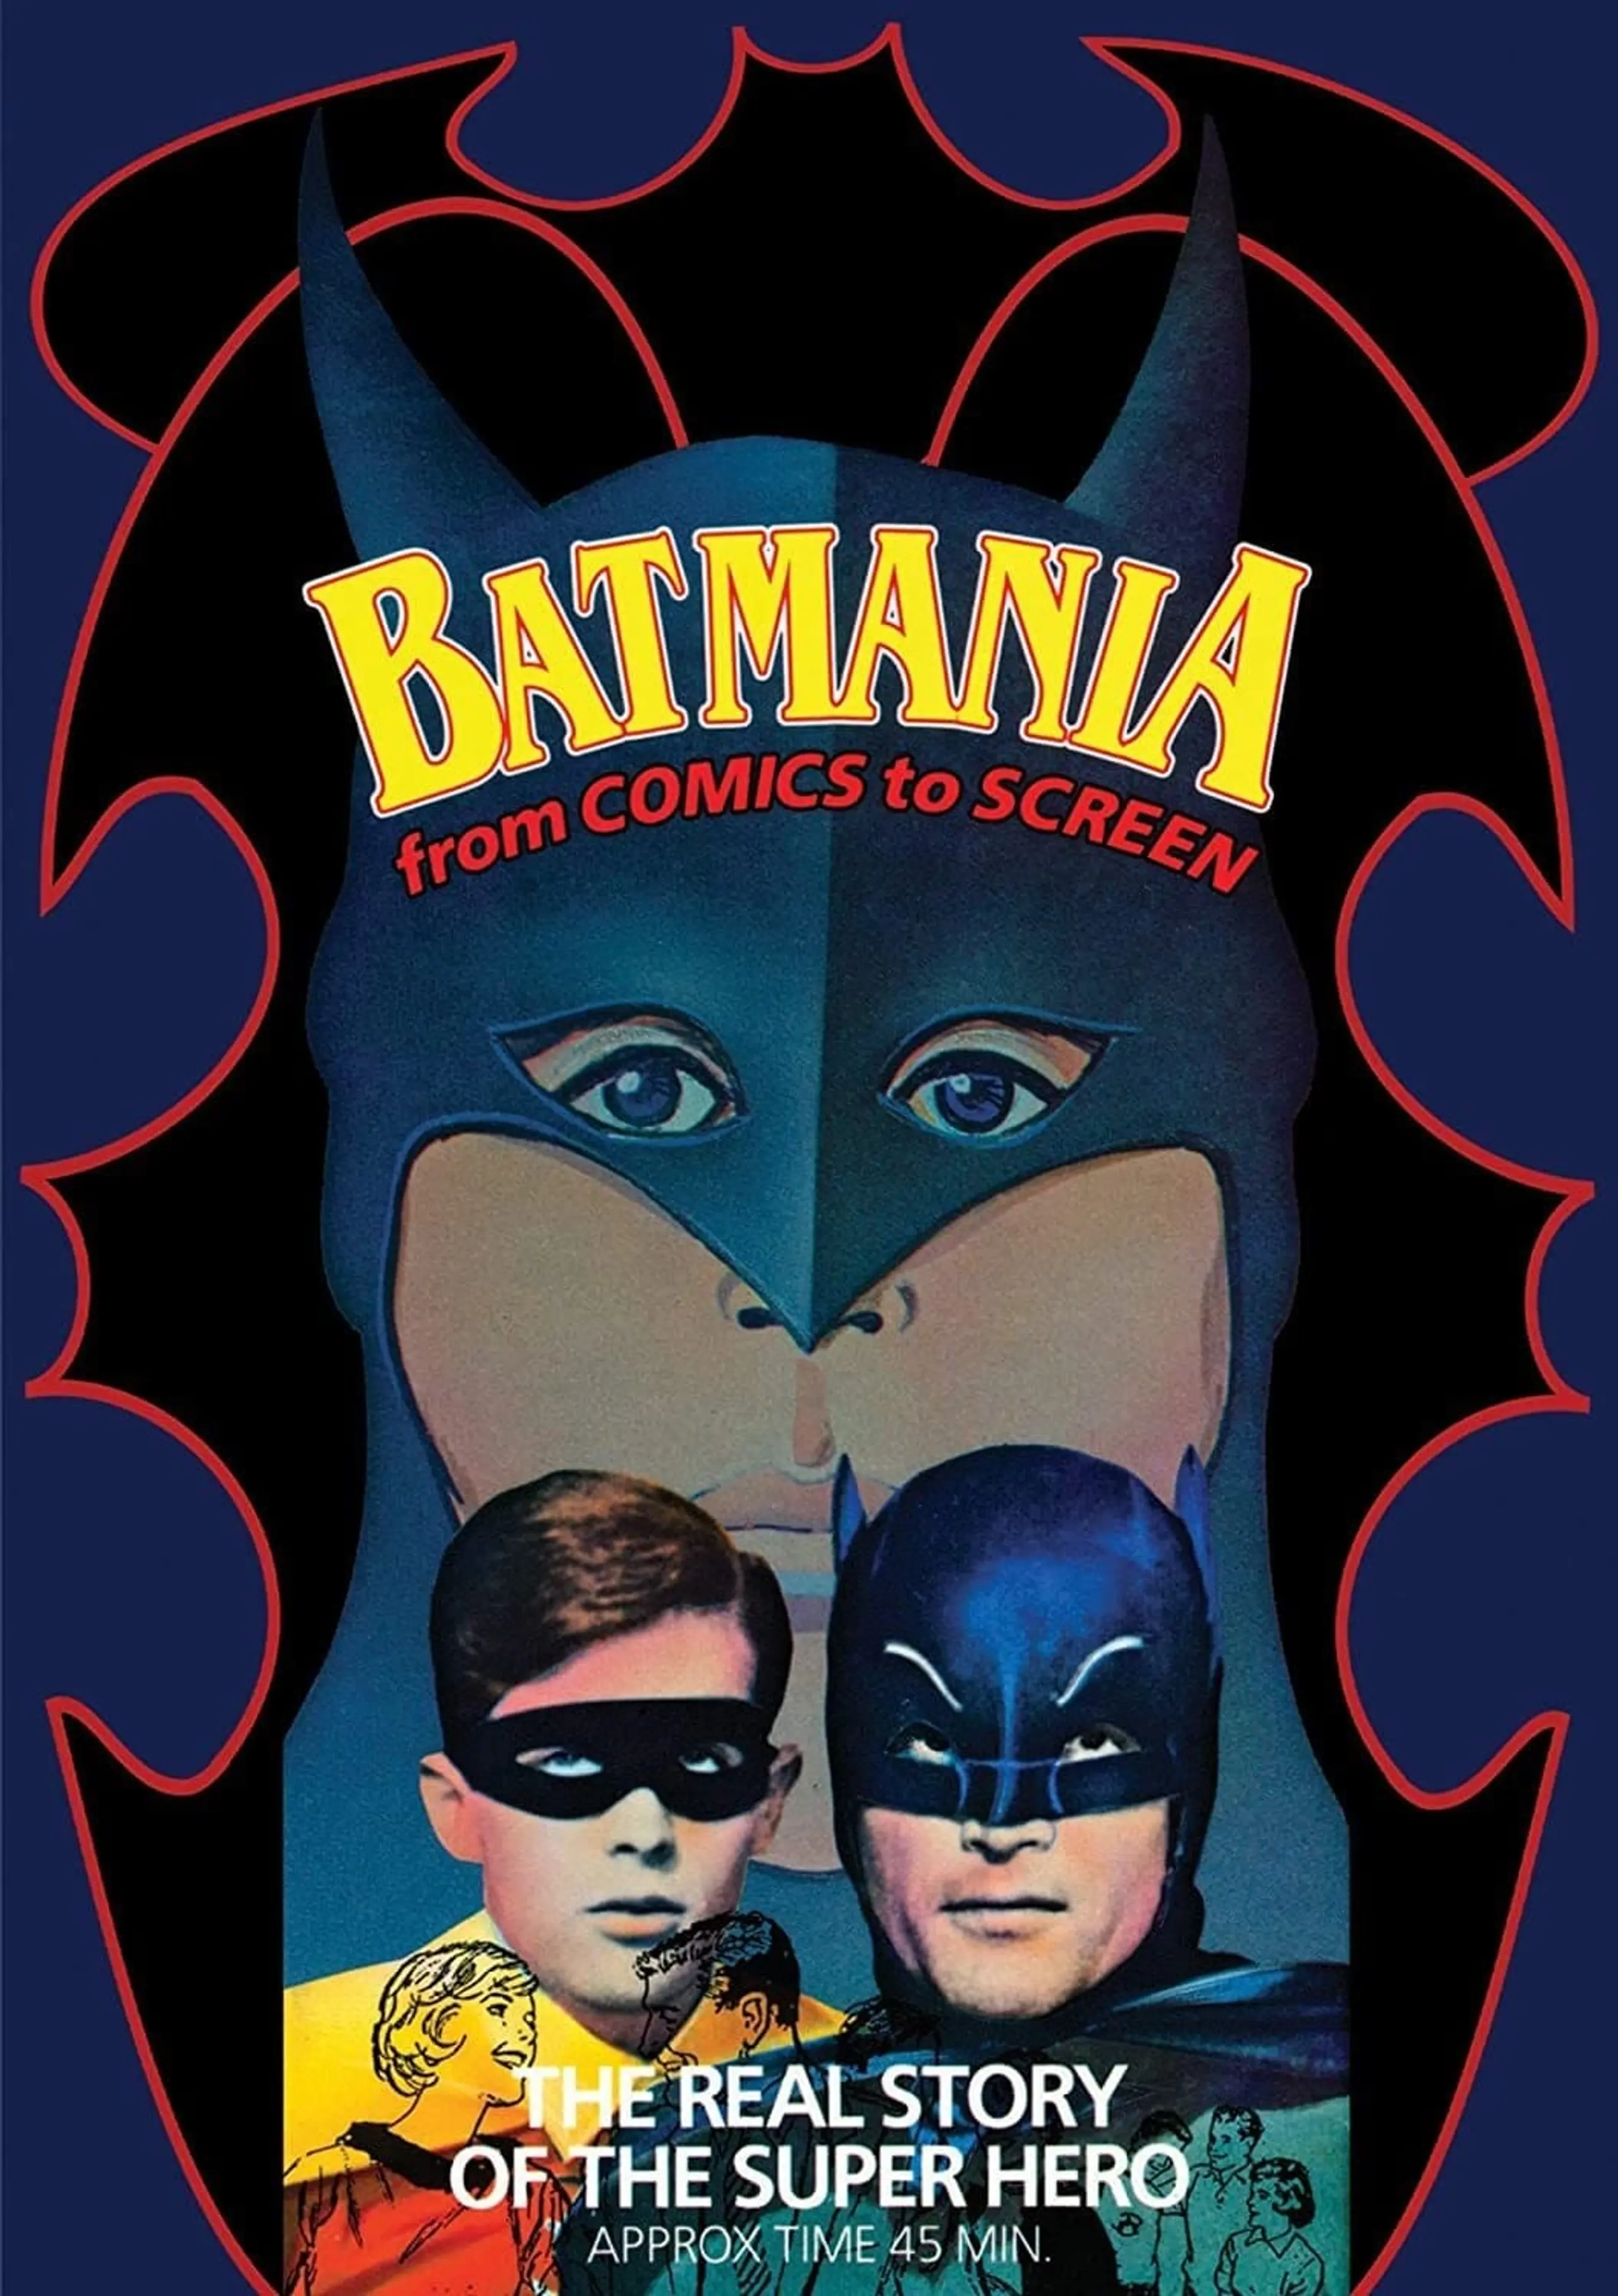 Batmania: From Comics to Screen